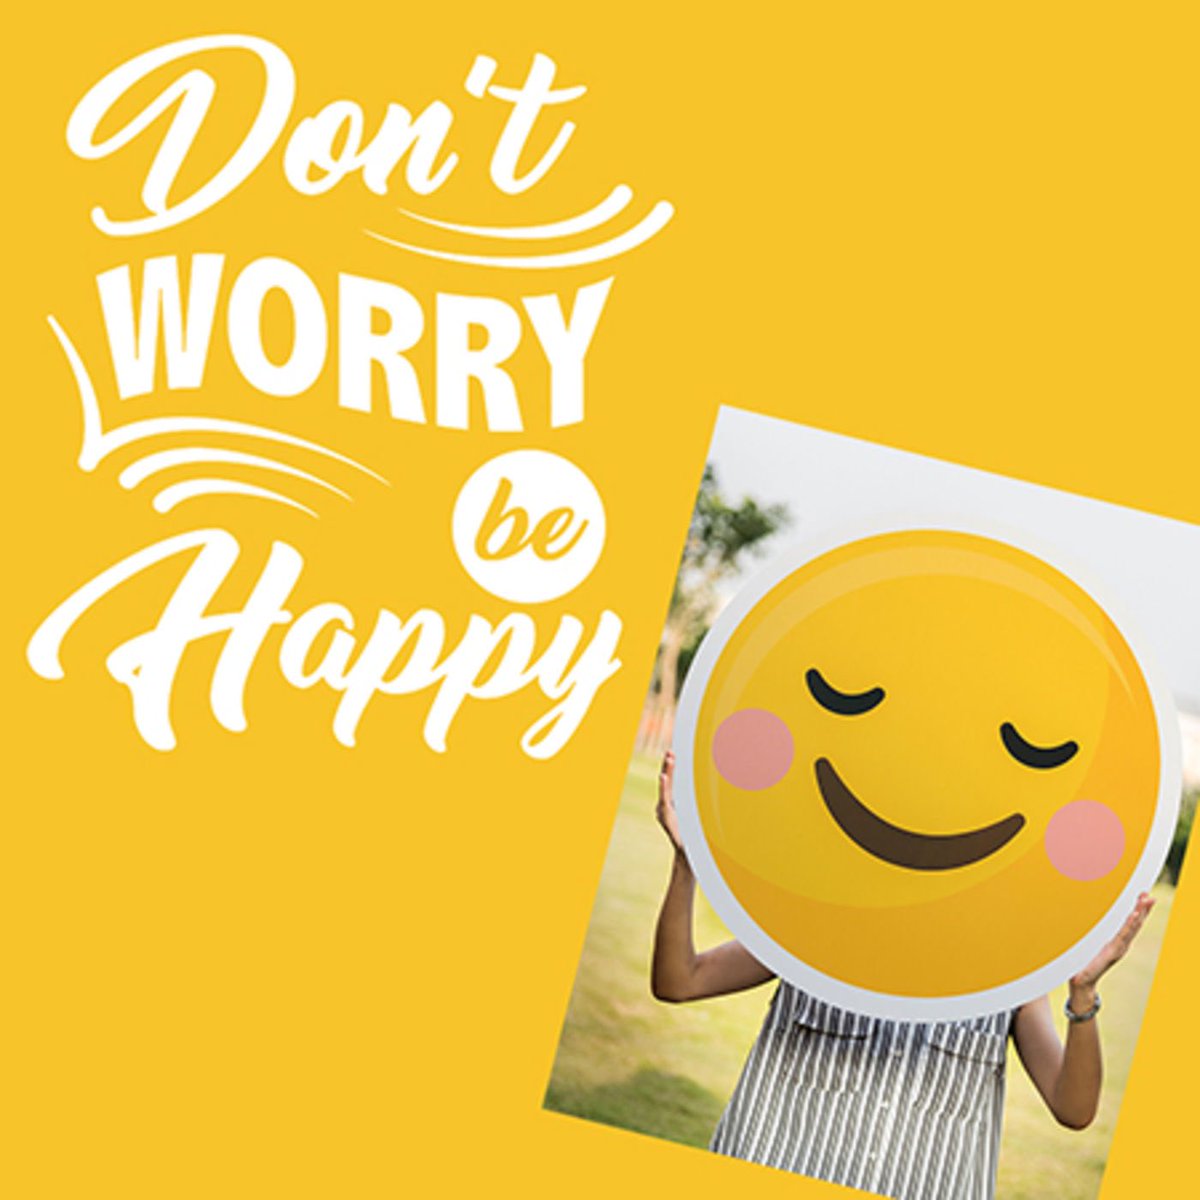 Включи be happy. Don`t worry be Happy. Don't worry be Happy картинки. Донт вори би Хэппи. Картина don't worry be Happy.